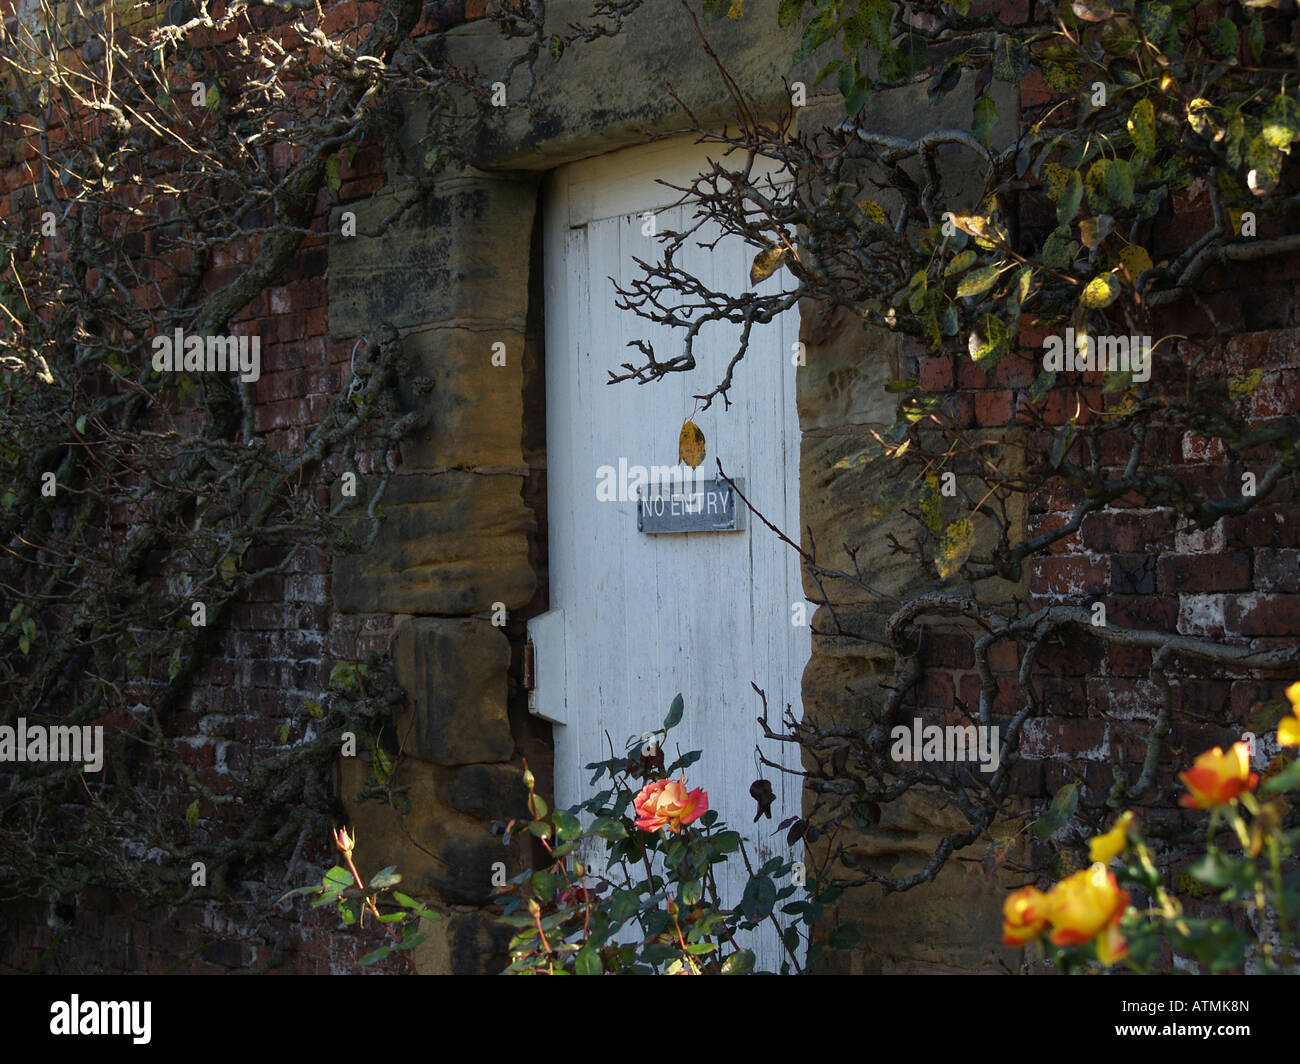 Doorway marked no entry in a garden Stock Photo